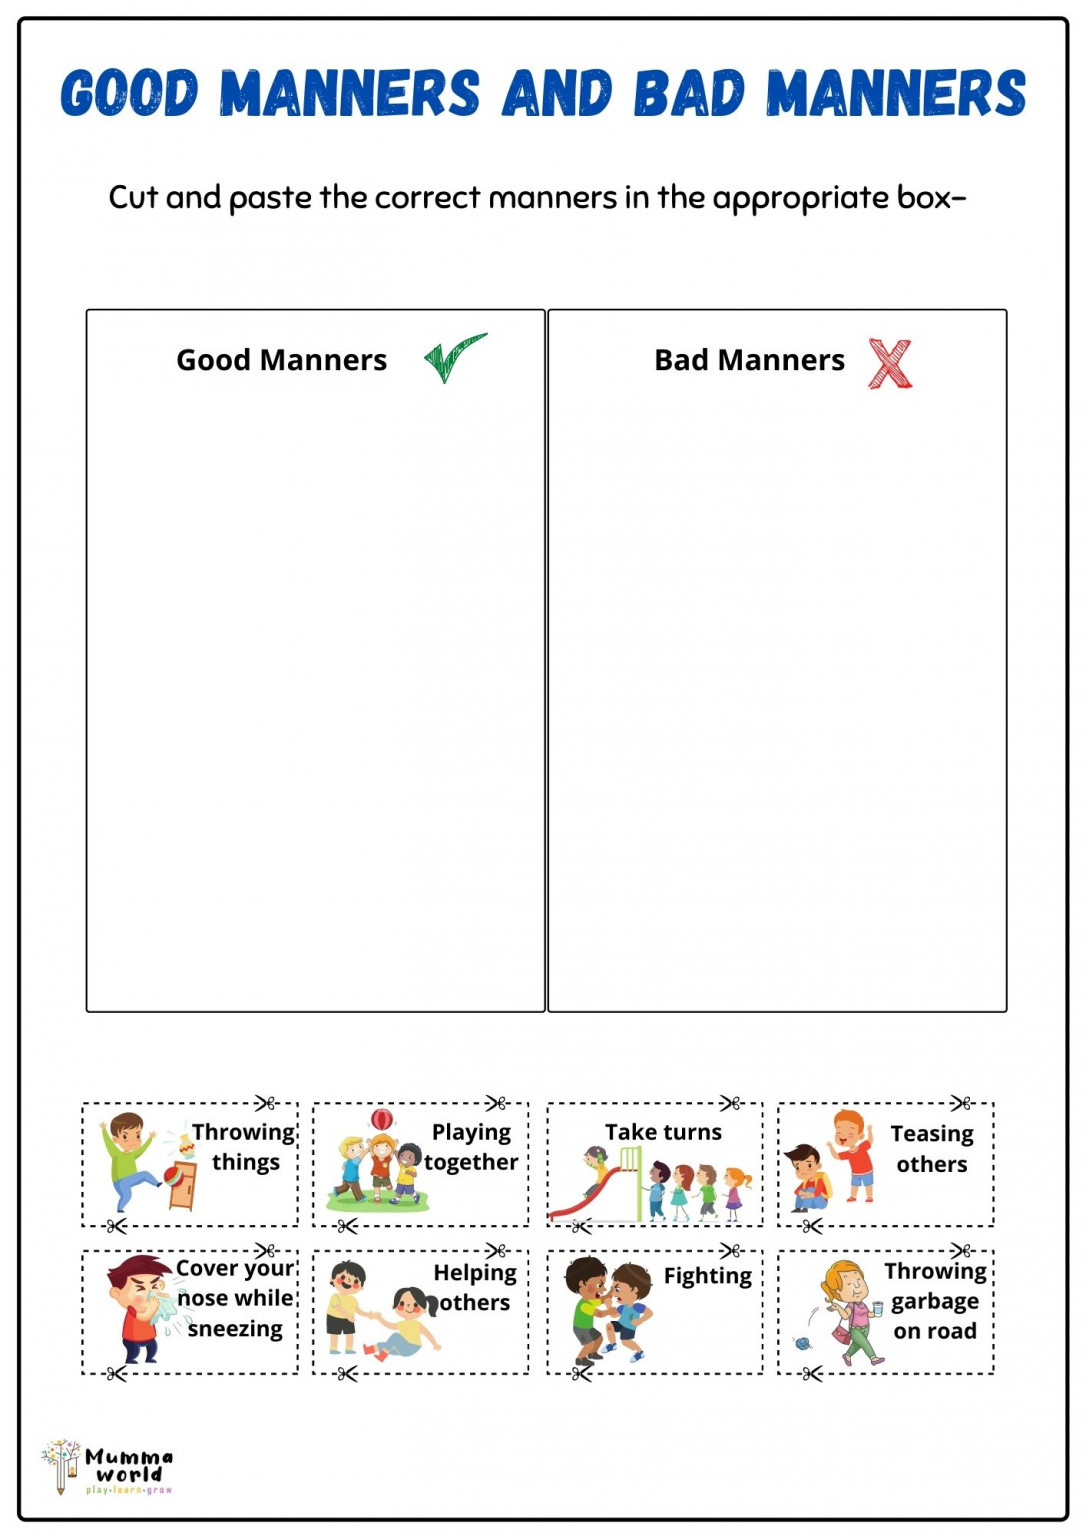 Manners worksheet for kids Good Manners Bad Manners Mummaworld com